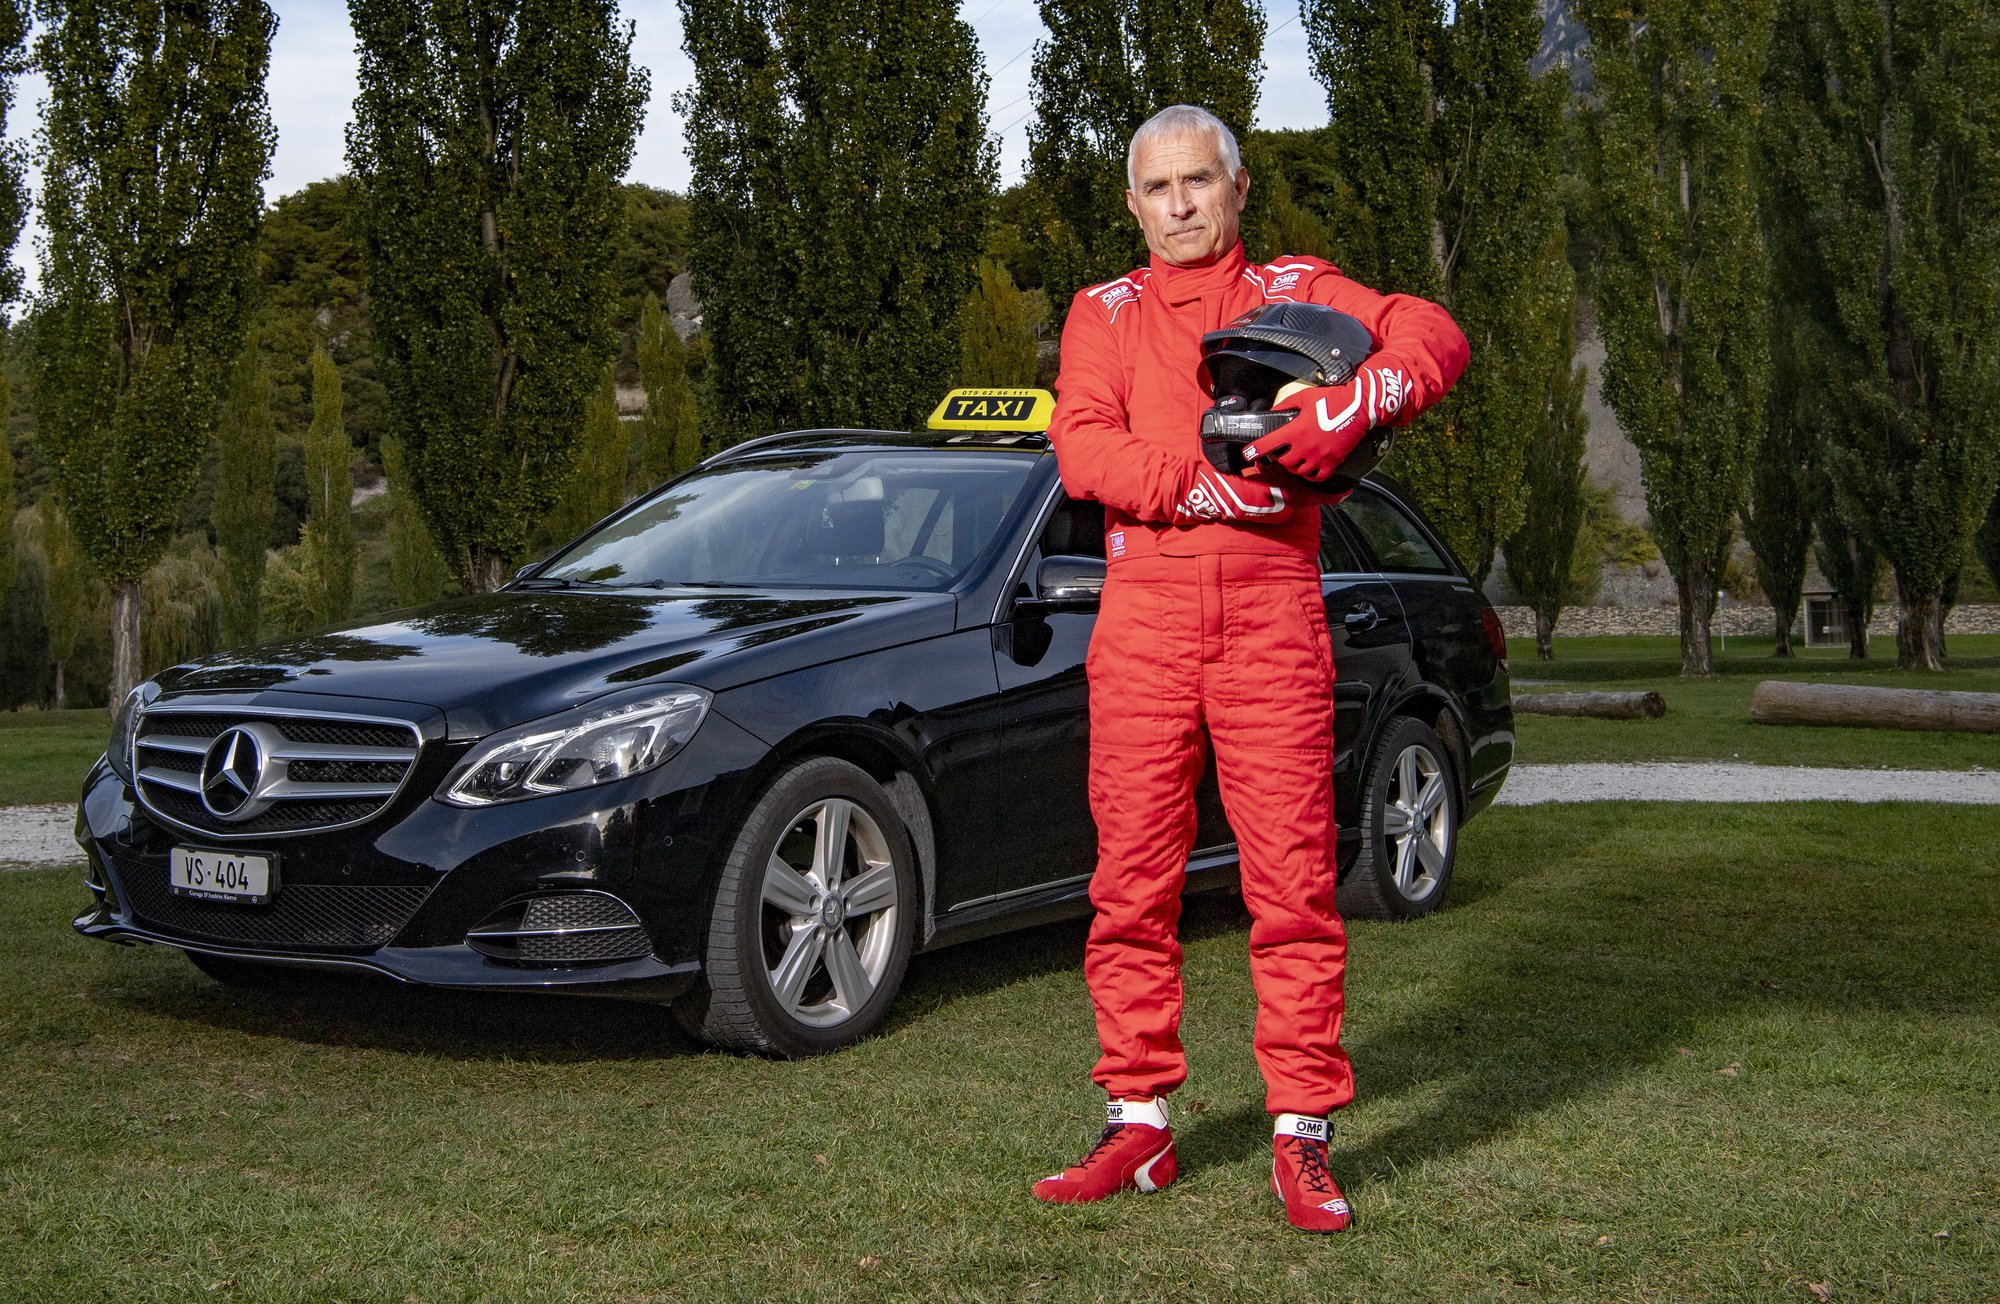 Michel Walter troquera son taxi pour une Ford Fiesta lors du Rallye du Valais, de jeudi à samedi.